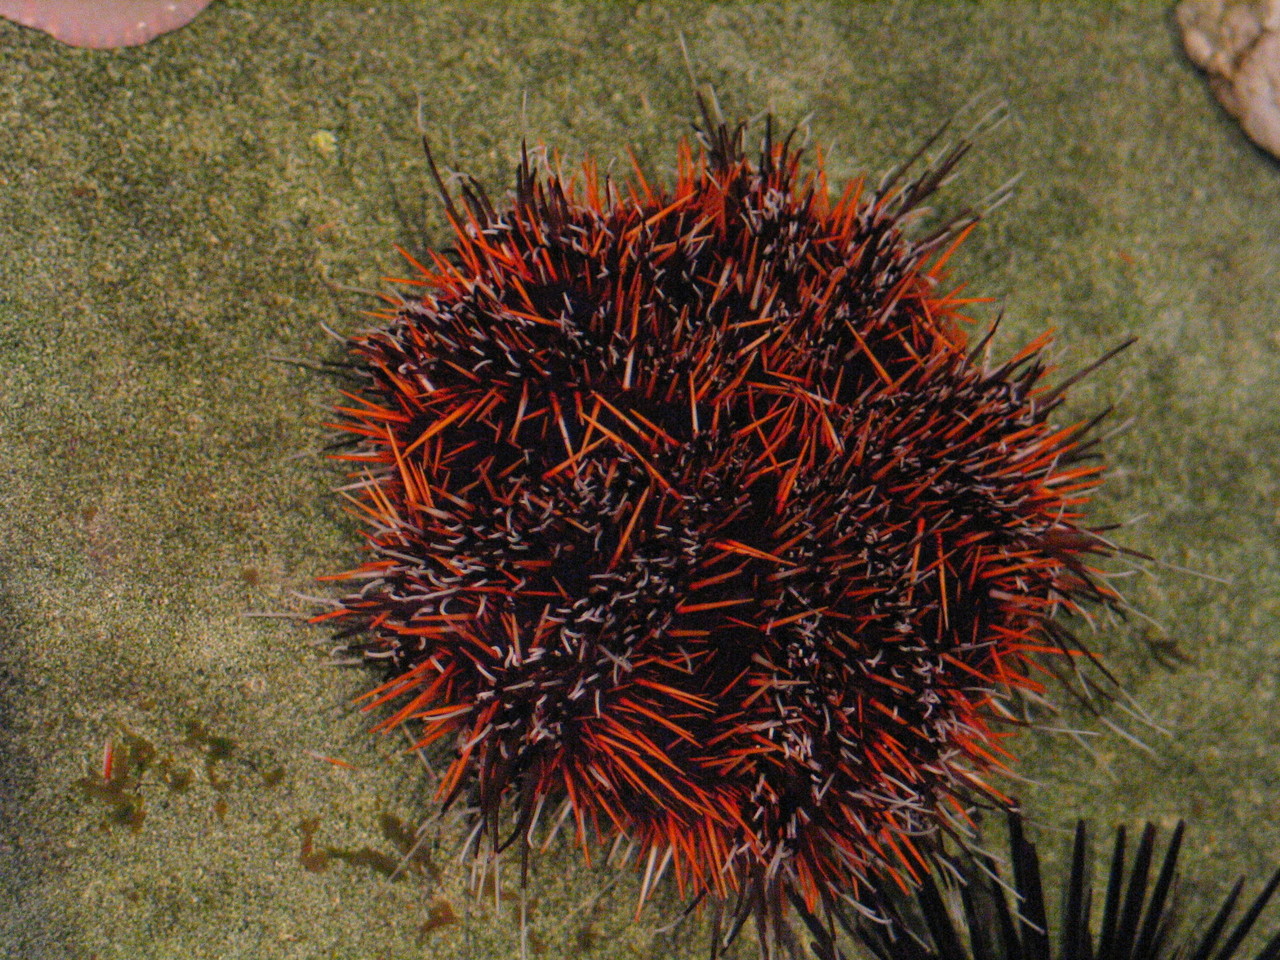 Collector urchin Tripneustes gratilla